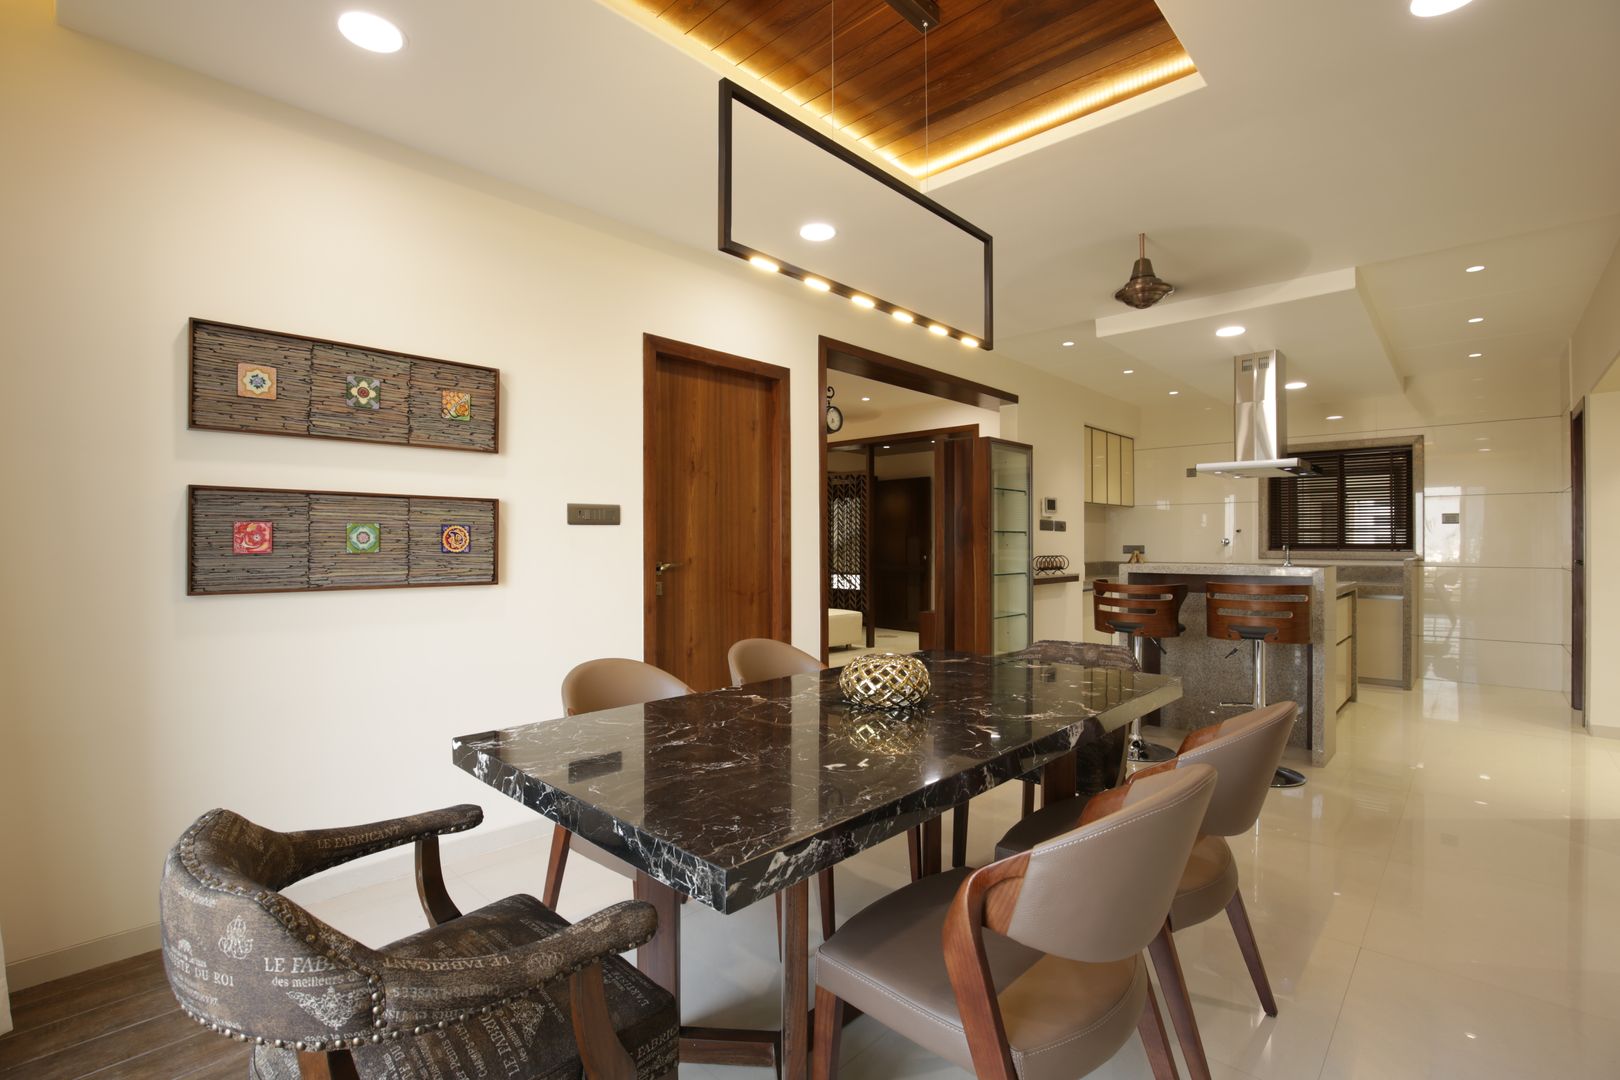 Mr vora's flat, studio 7 designs studio 7 designs Asian style dining room